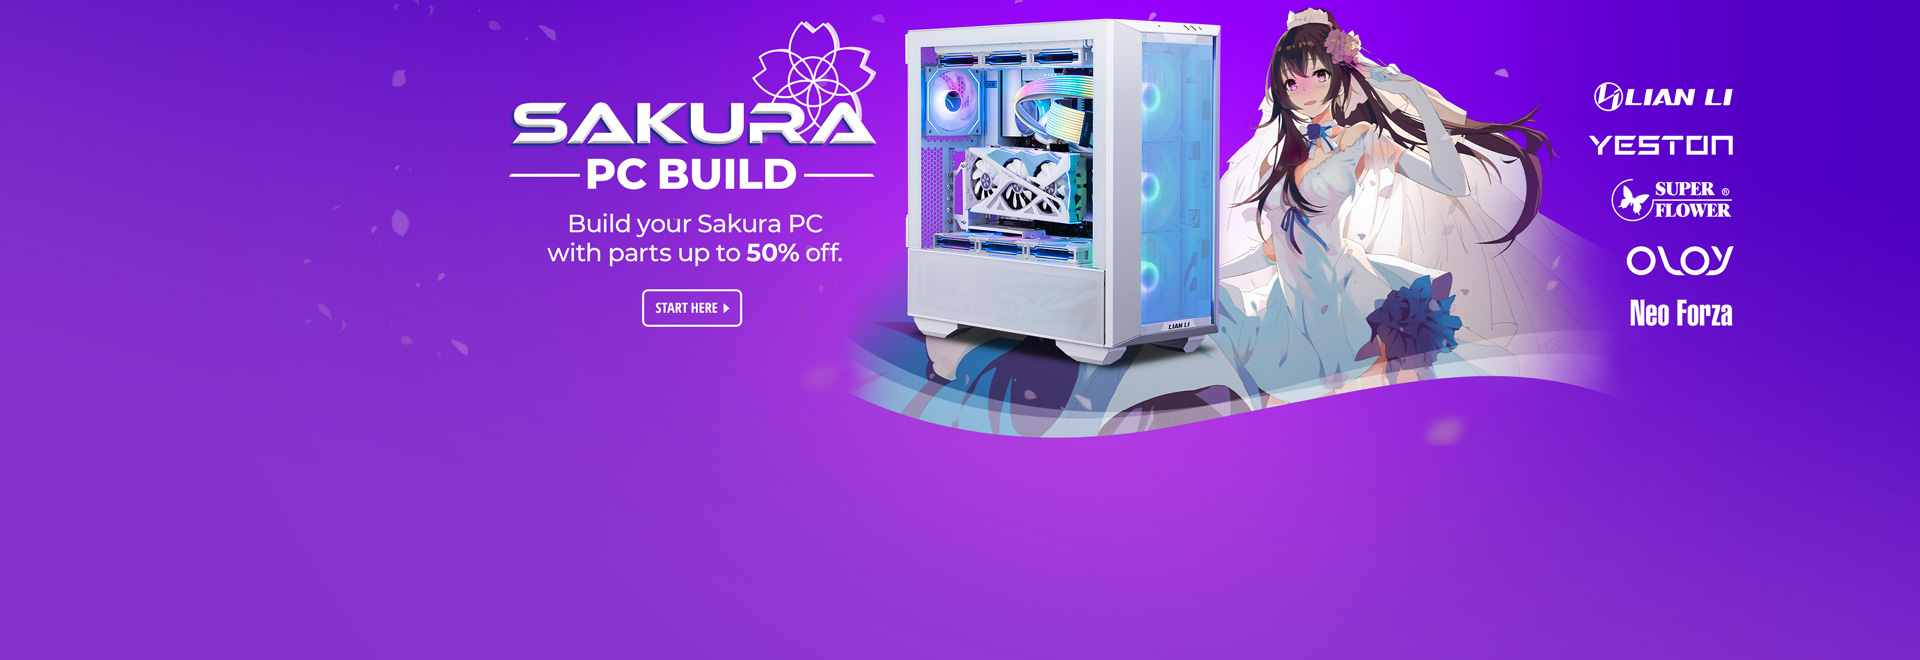 Sakura PC Build